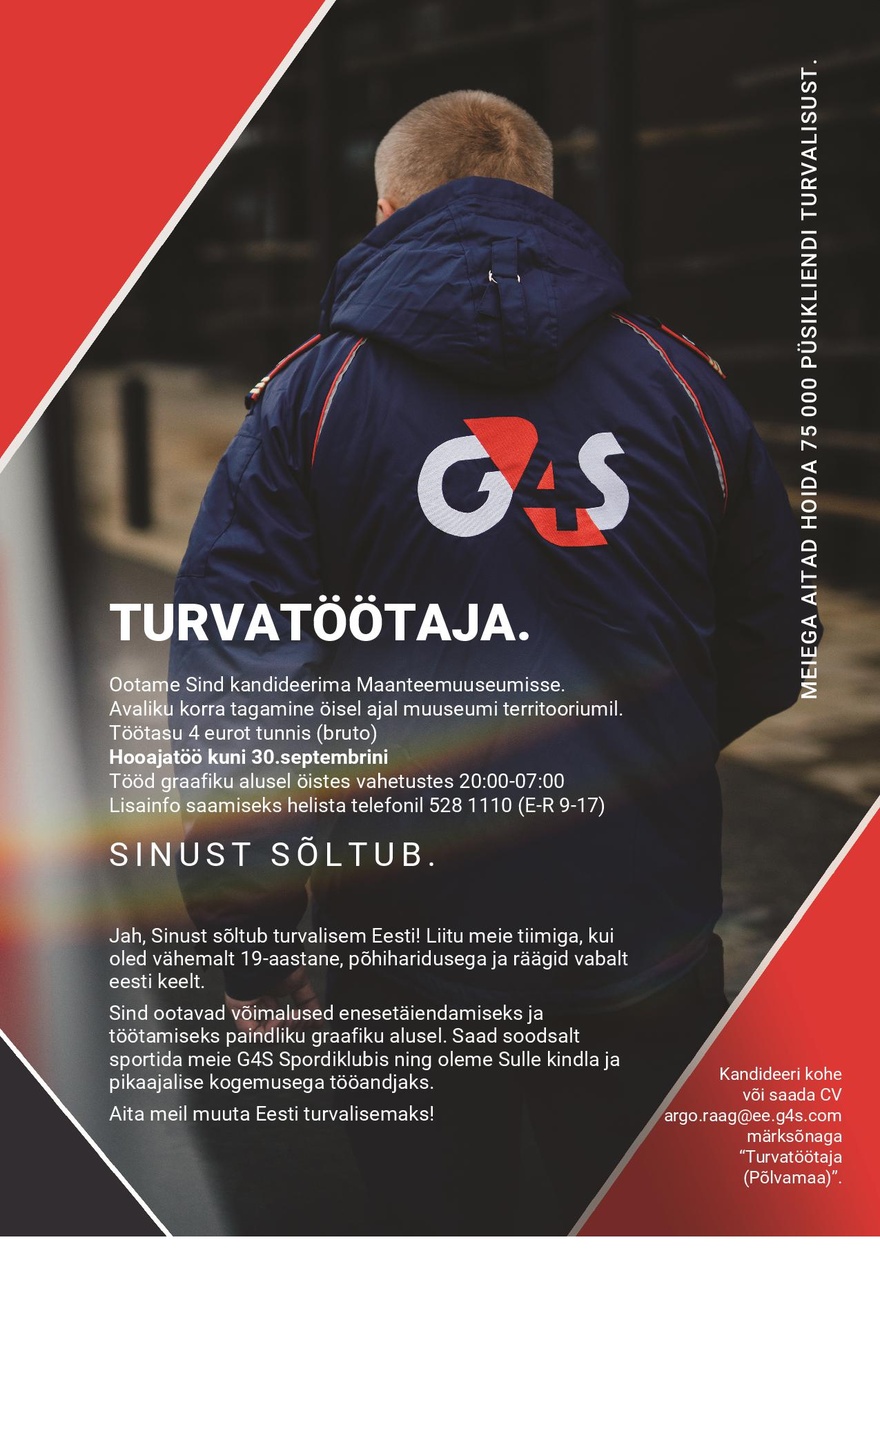 AS G4S Eesti Turvatöötaja (Põlvamaa)